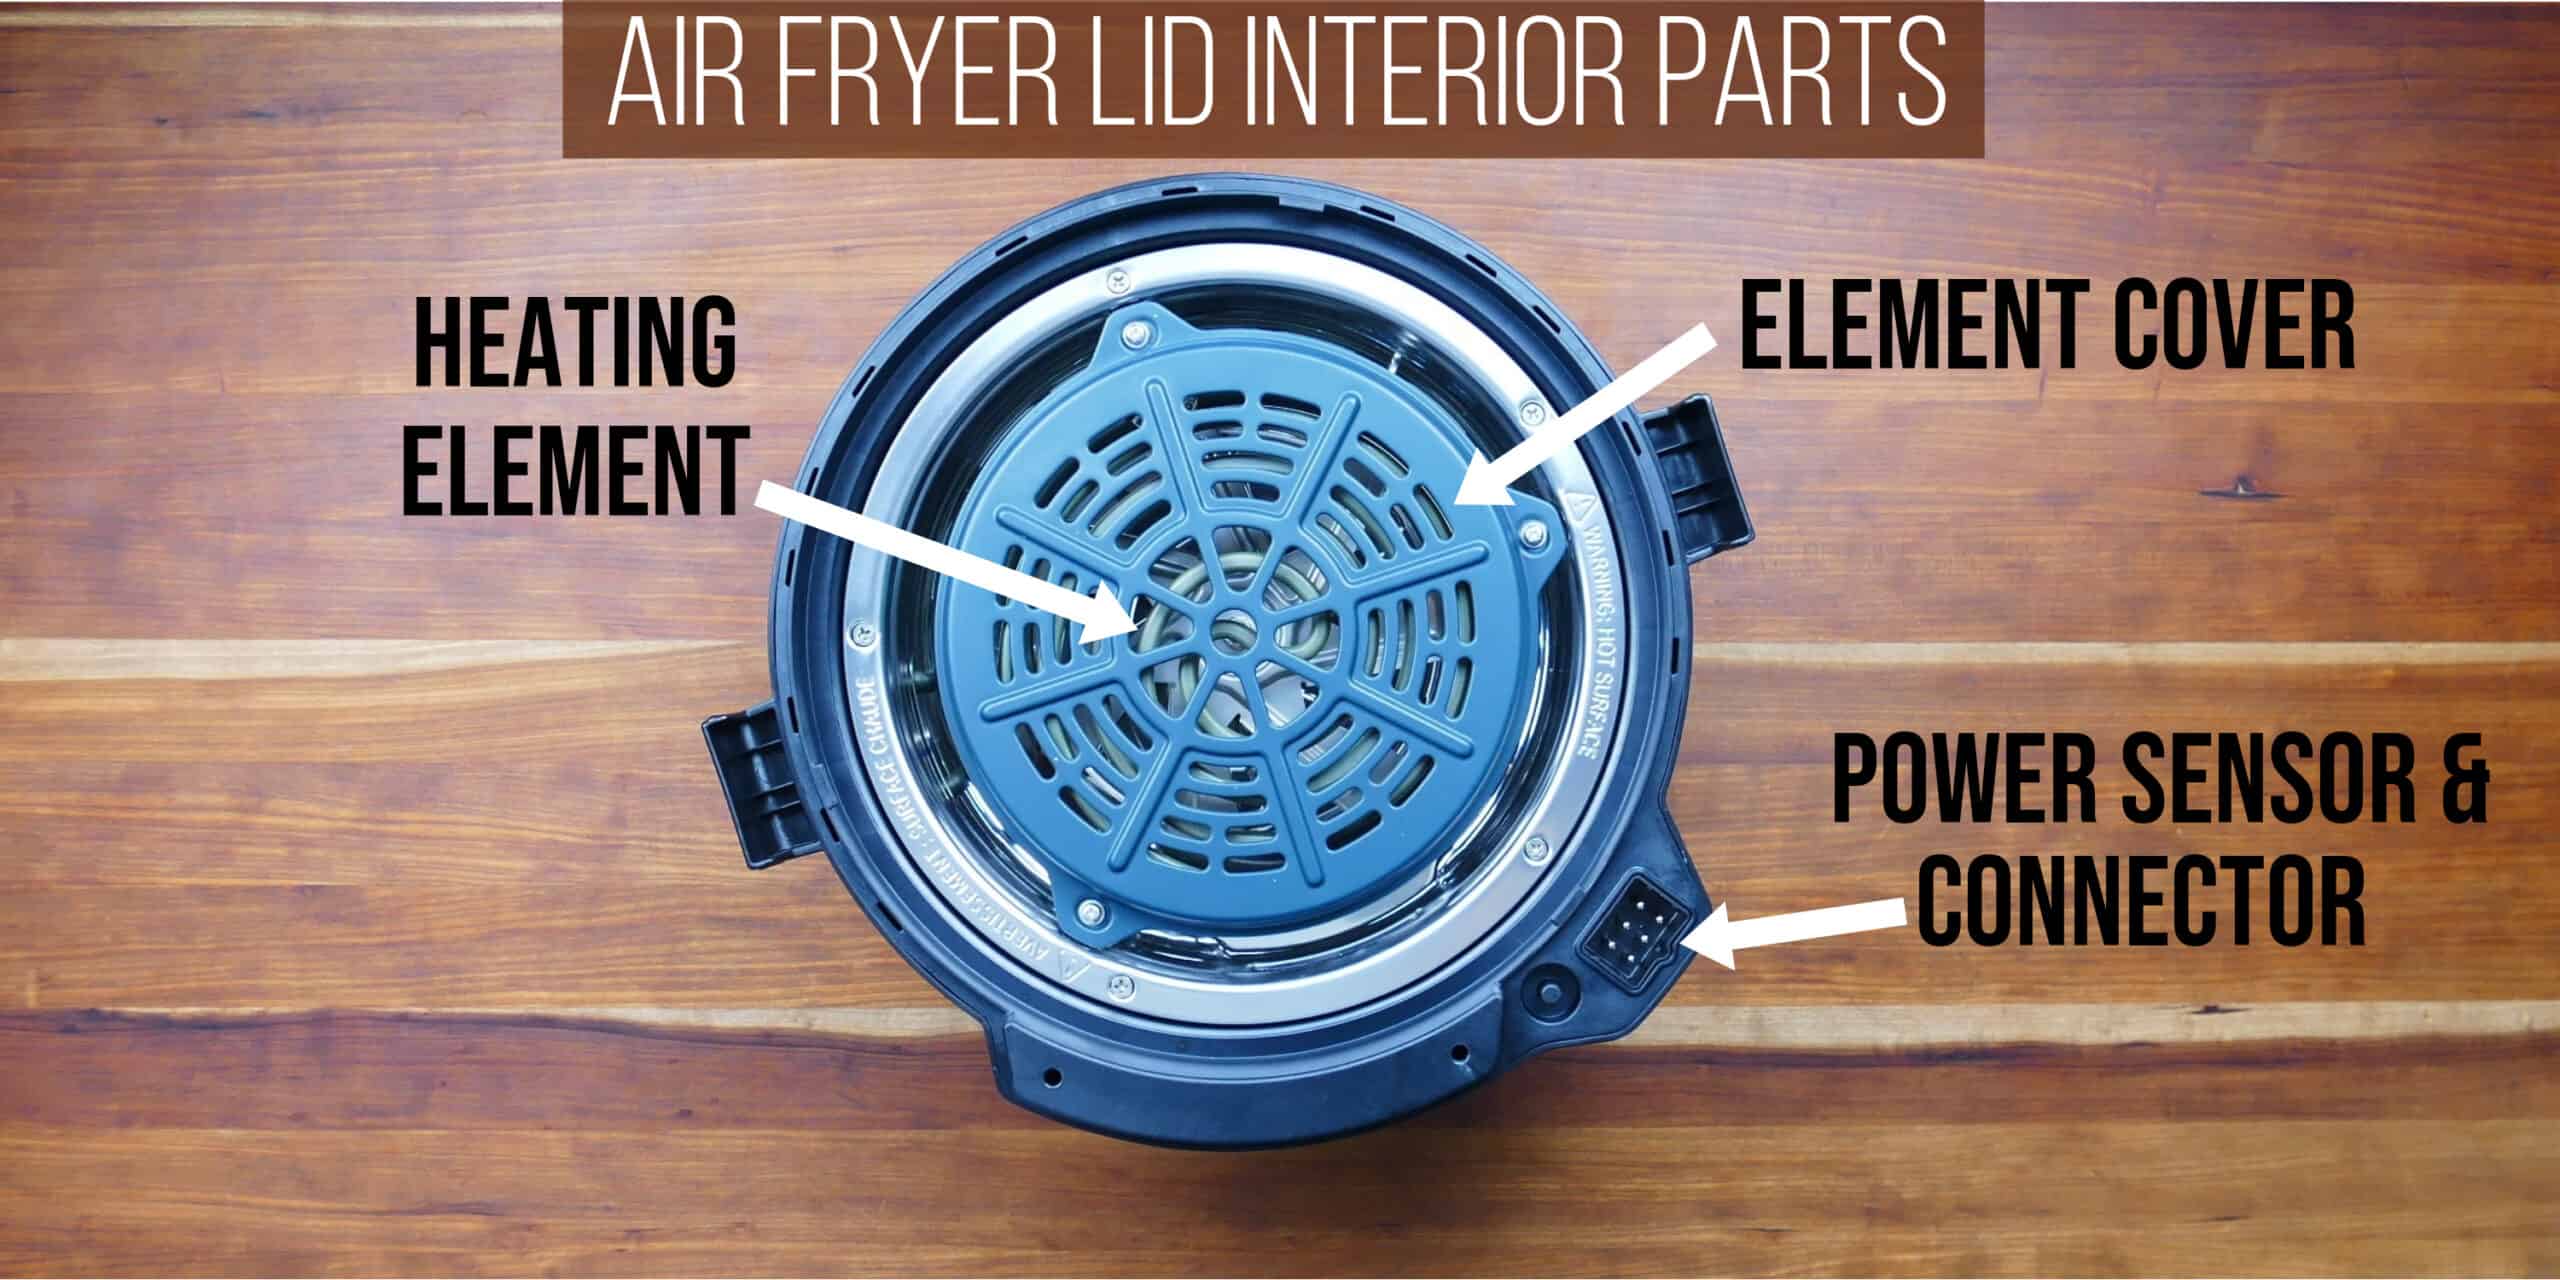 Instant Pot Duo Crisp Air Fryer Lid Interior Parts - heating element, element cover, power sensor and connector